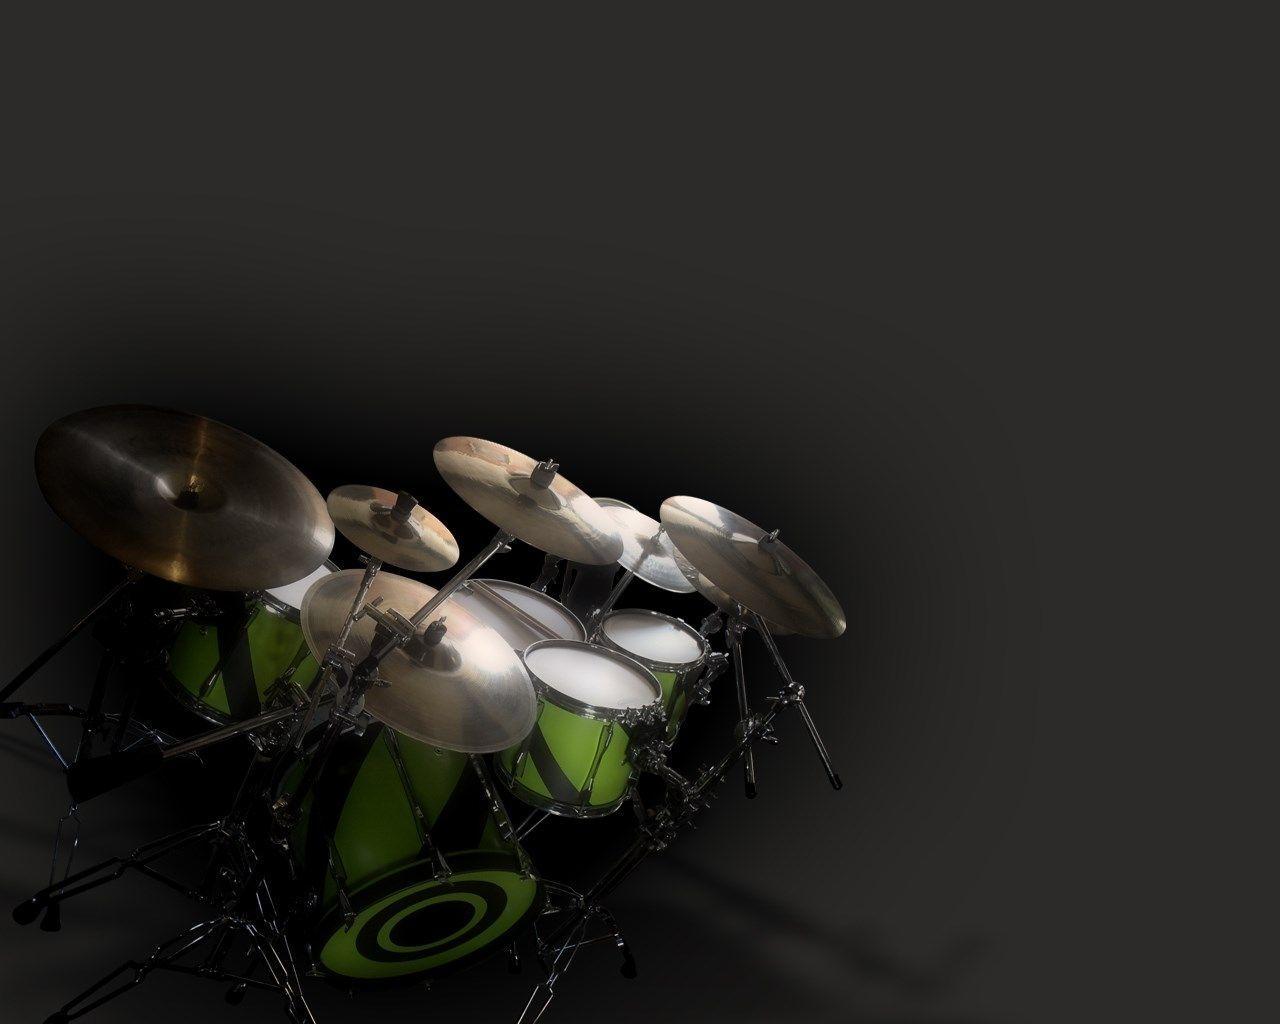 drum set HD wallpaper. sharovarka. Drum sets and HD